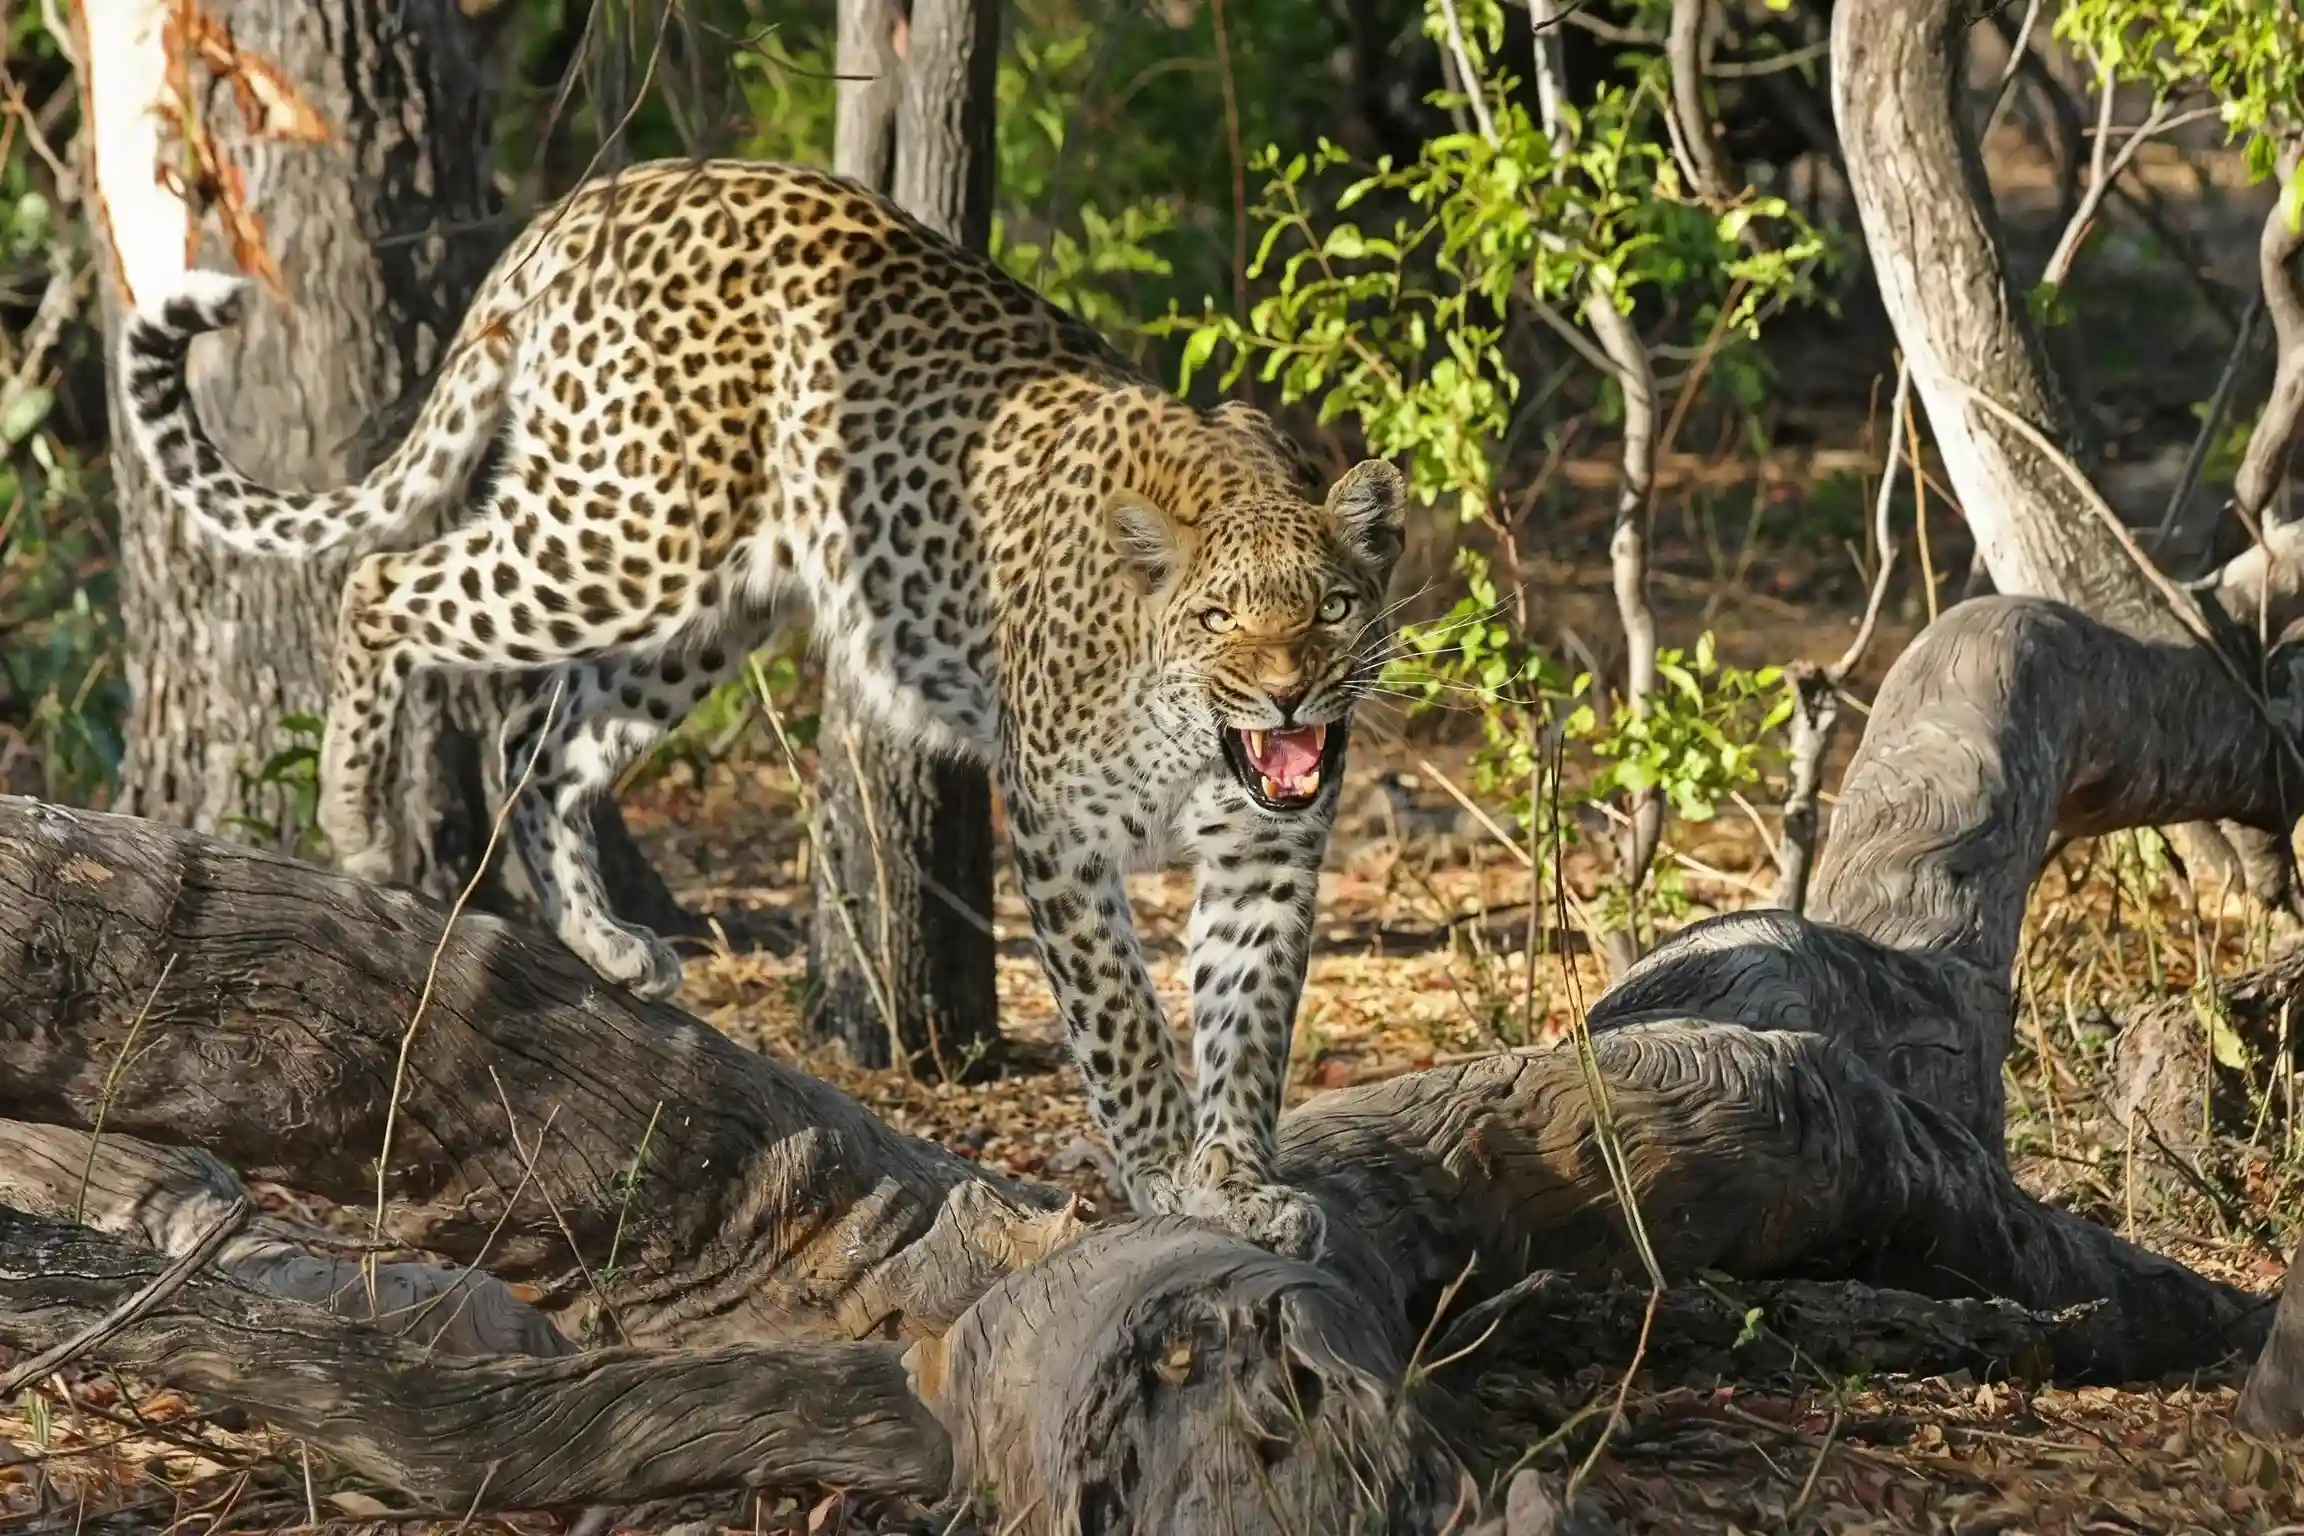 6-Day Midrange Tanzania Safari